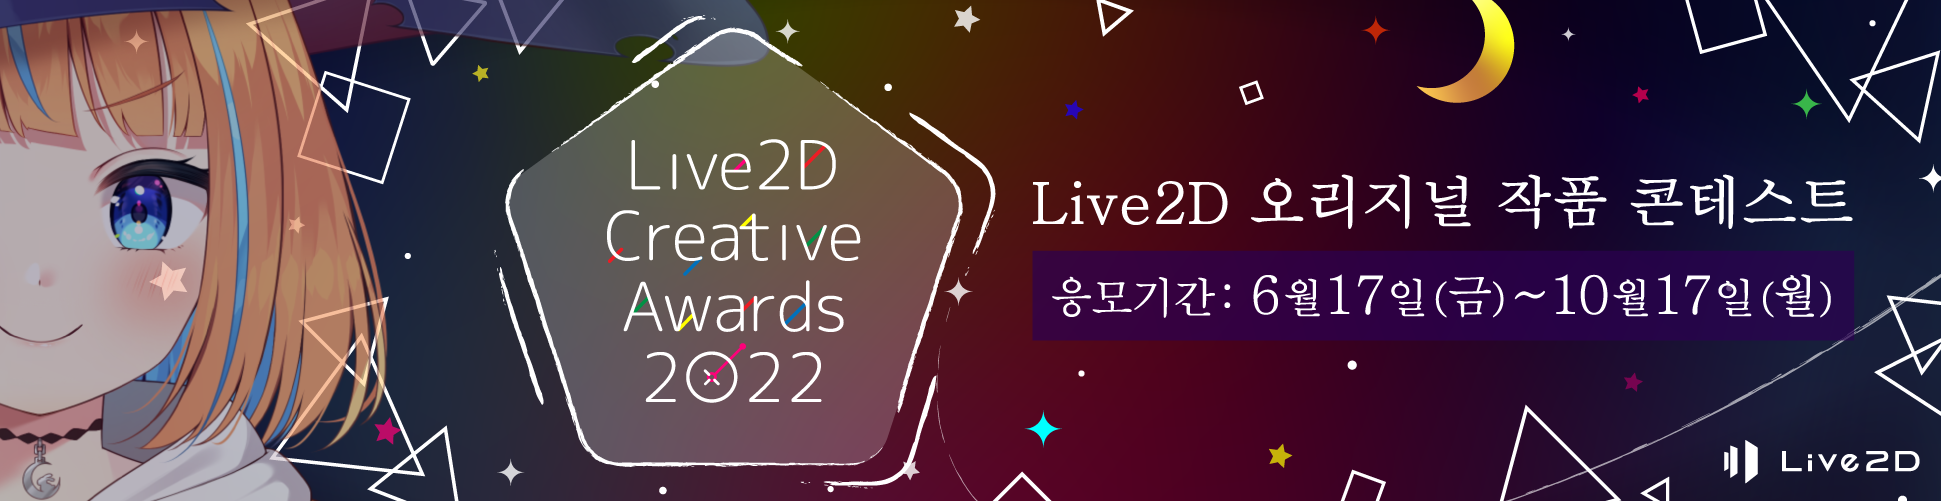 Live2D Creative Awards 2022